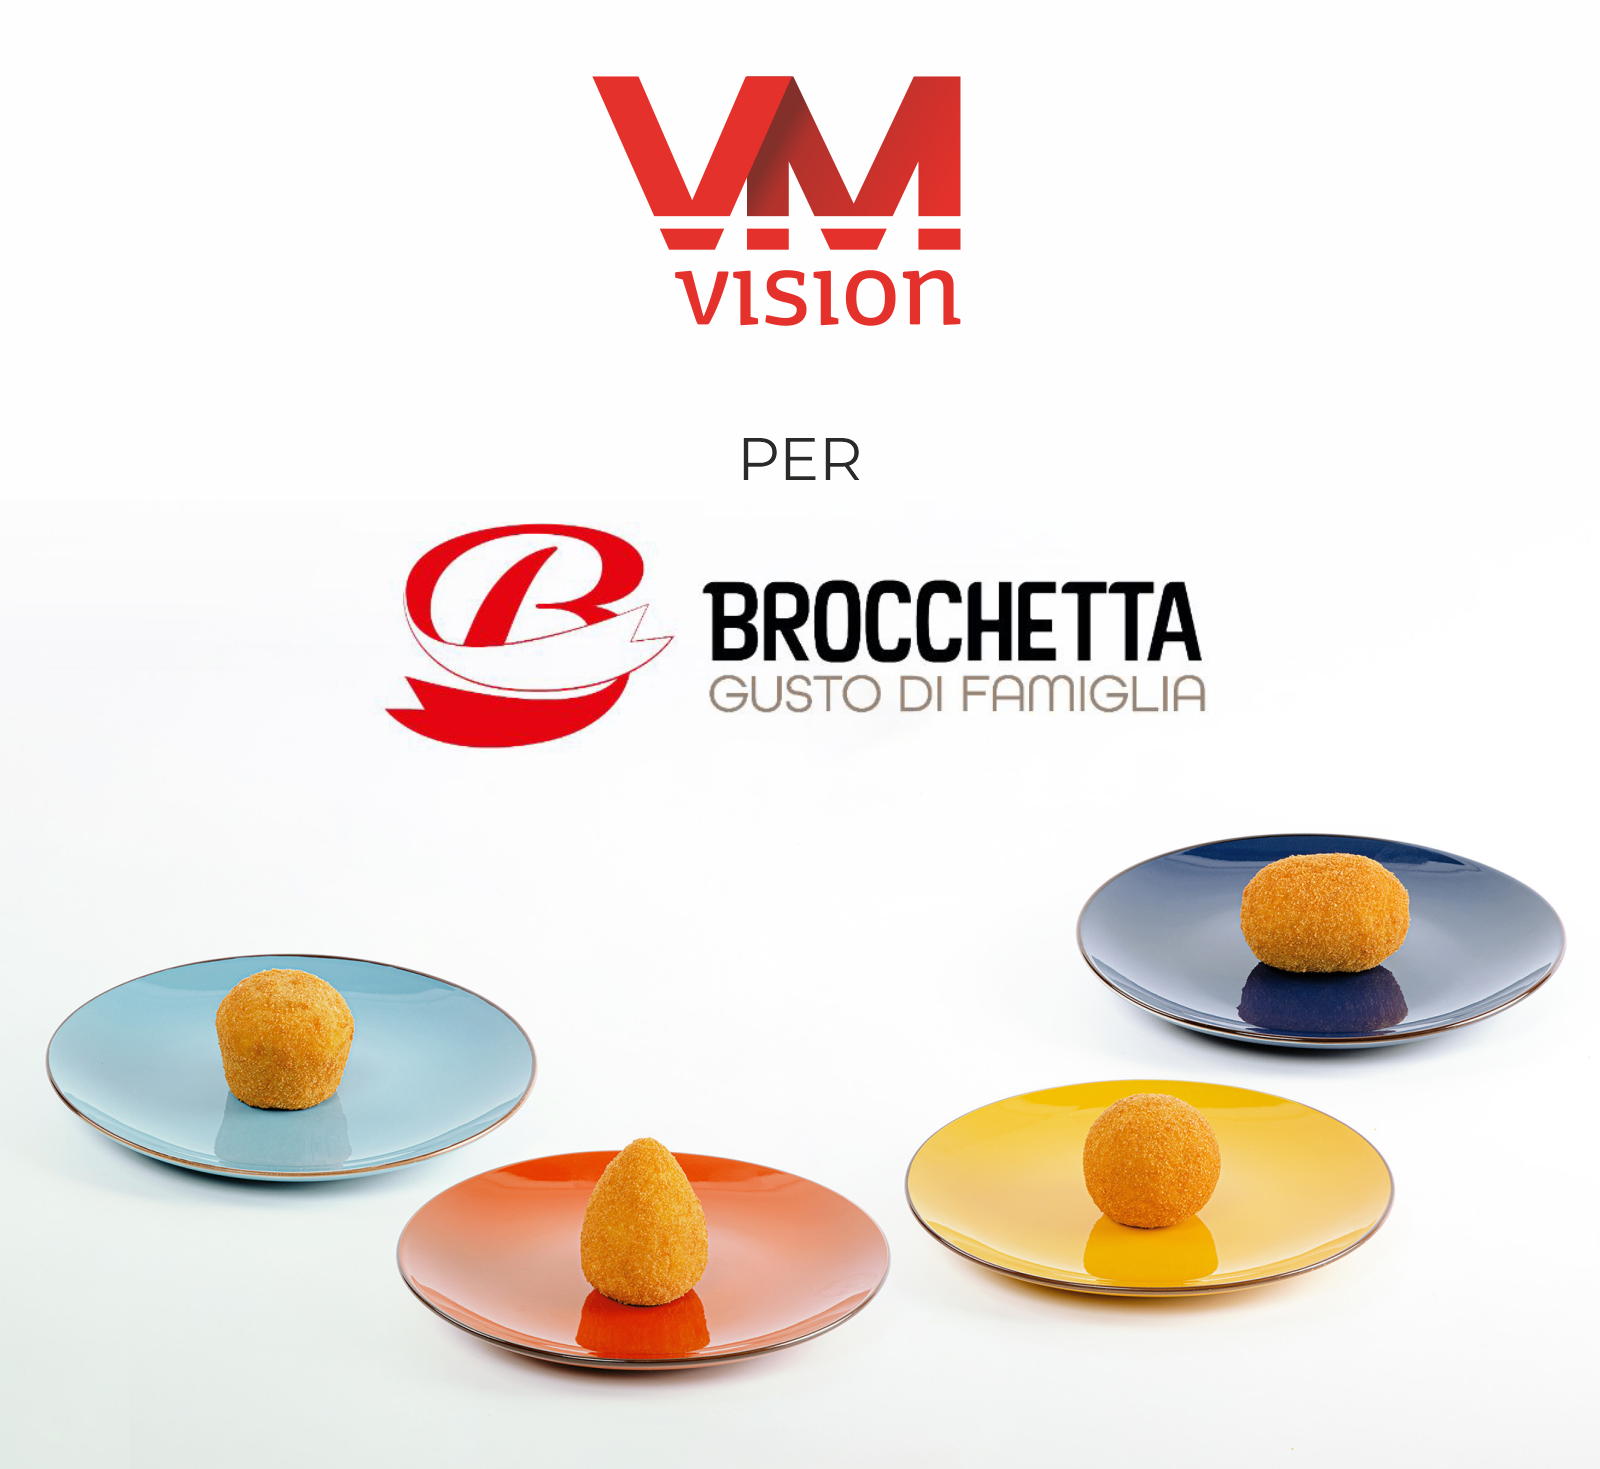 VM Vision per Brocchetta